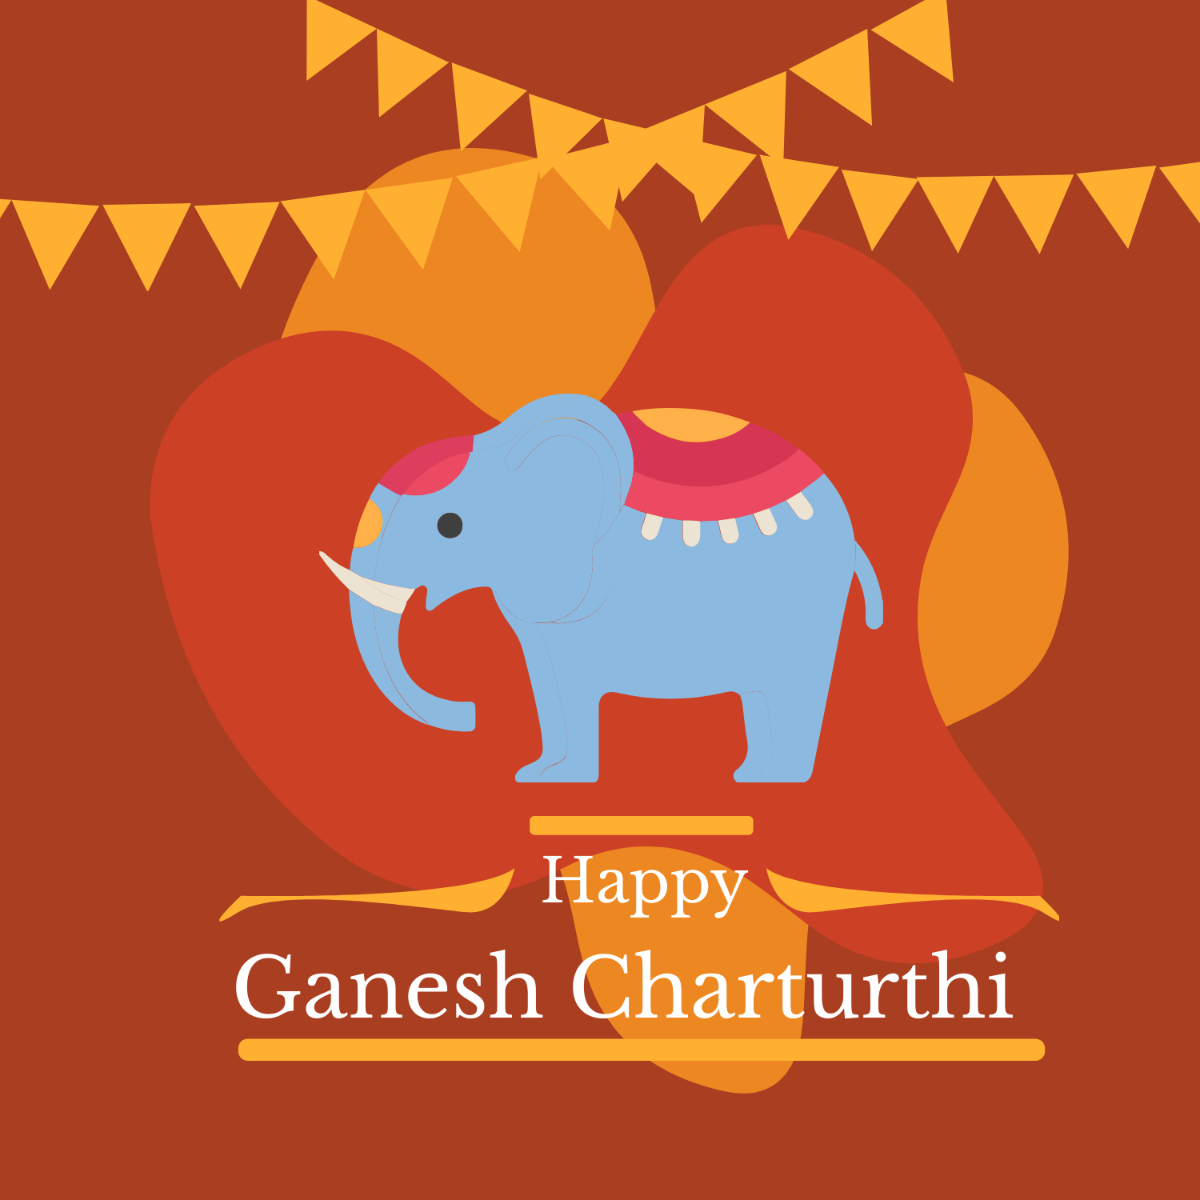 Ganesh Chaturthi Illustration Template